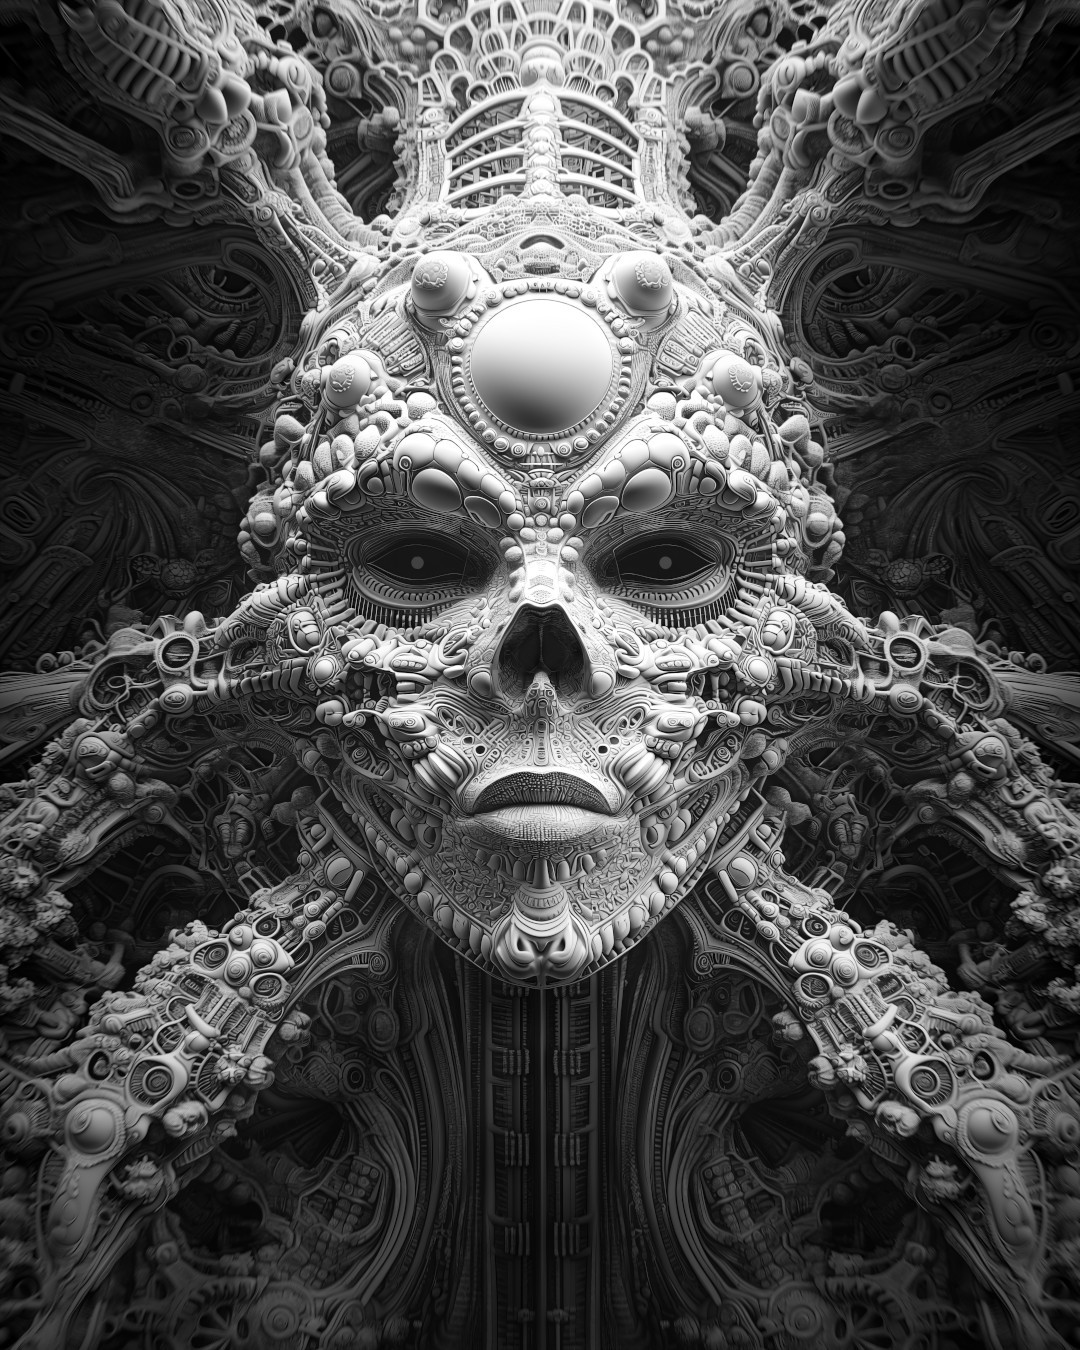 Intricate skull, ornate complexity, monochrome